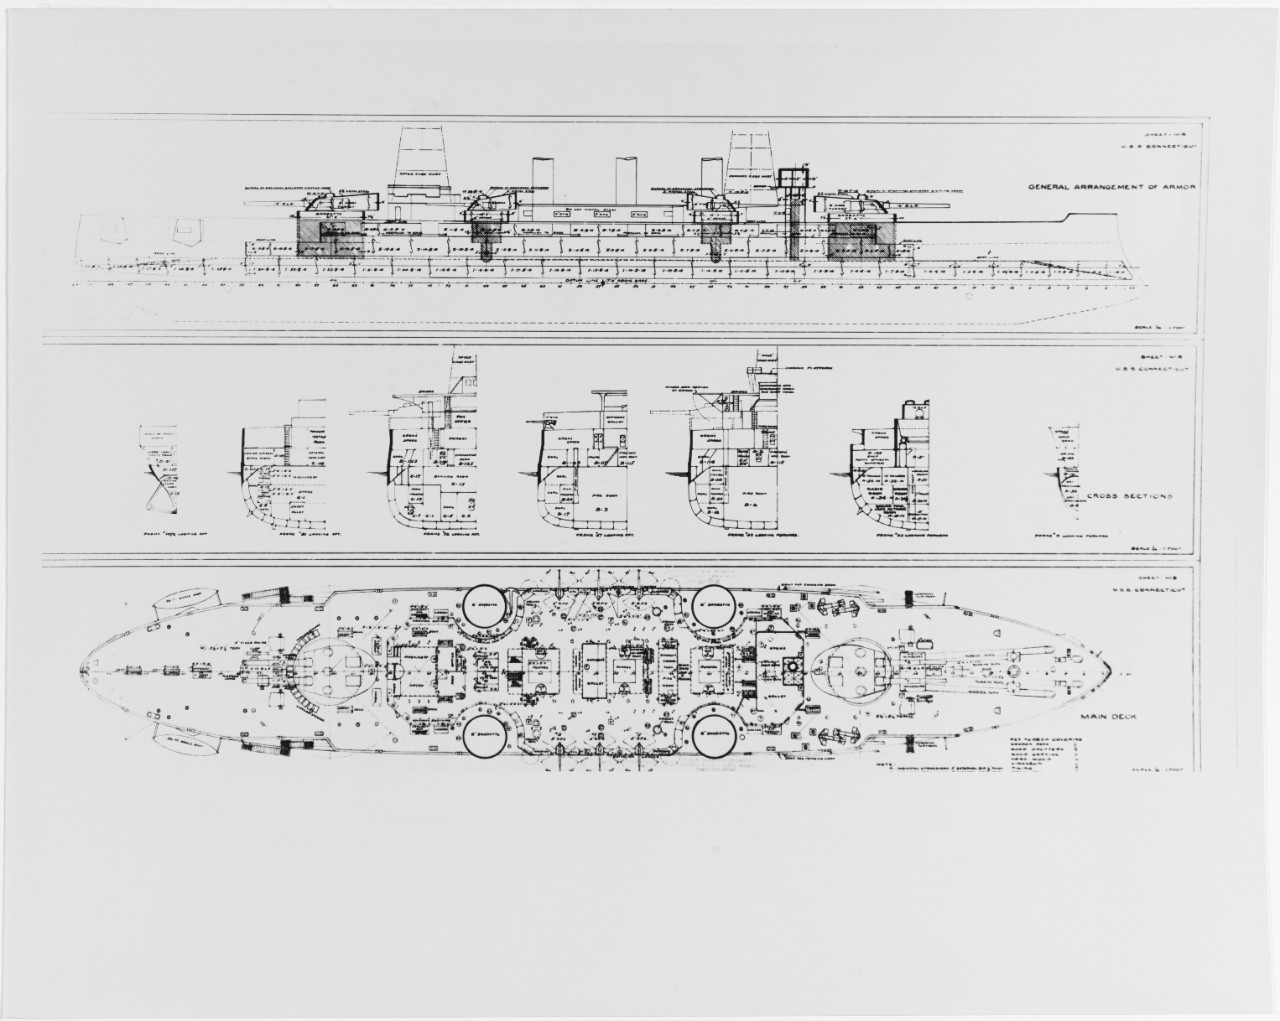 USS CONNECTICUT (BB-18)